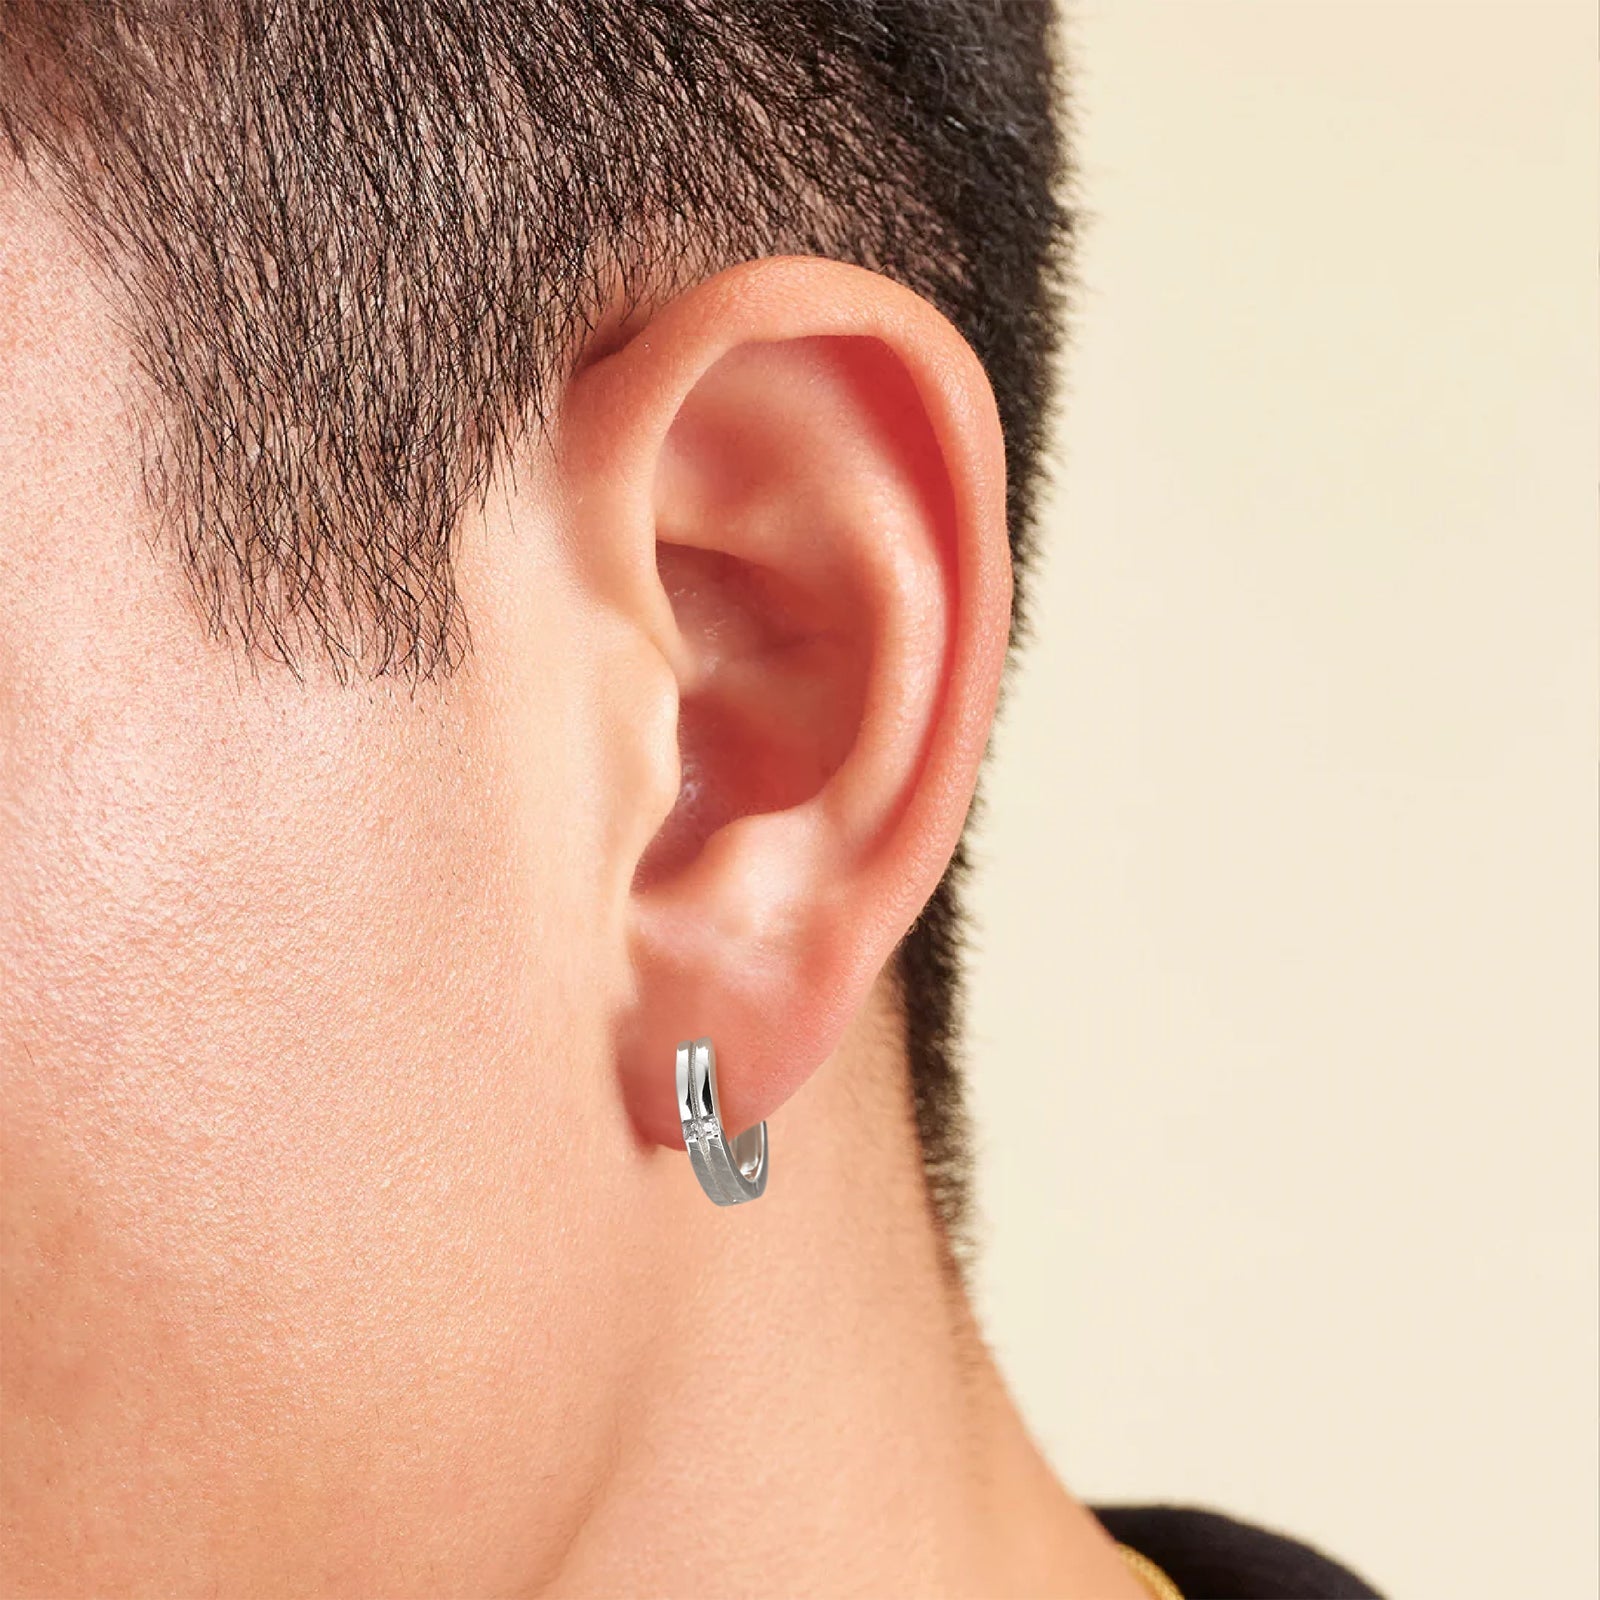 Wholesale Men's Earrings 15mm Iced Round Hoop Earrings for Men